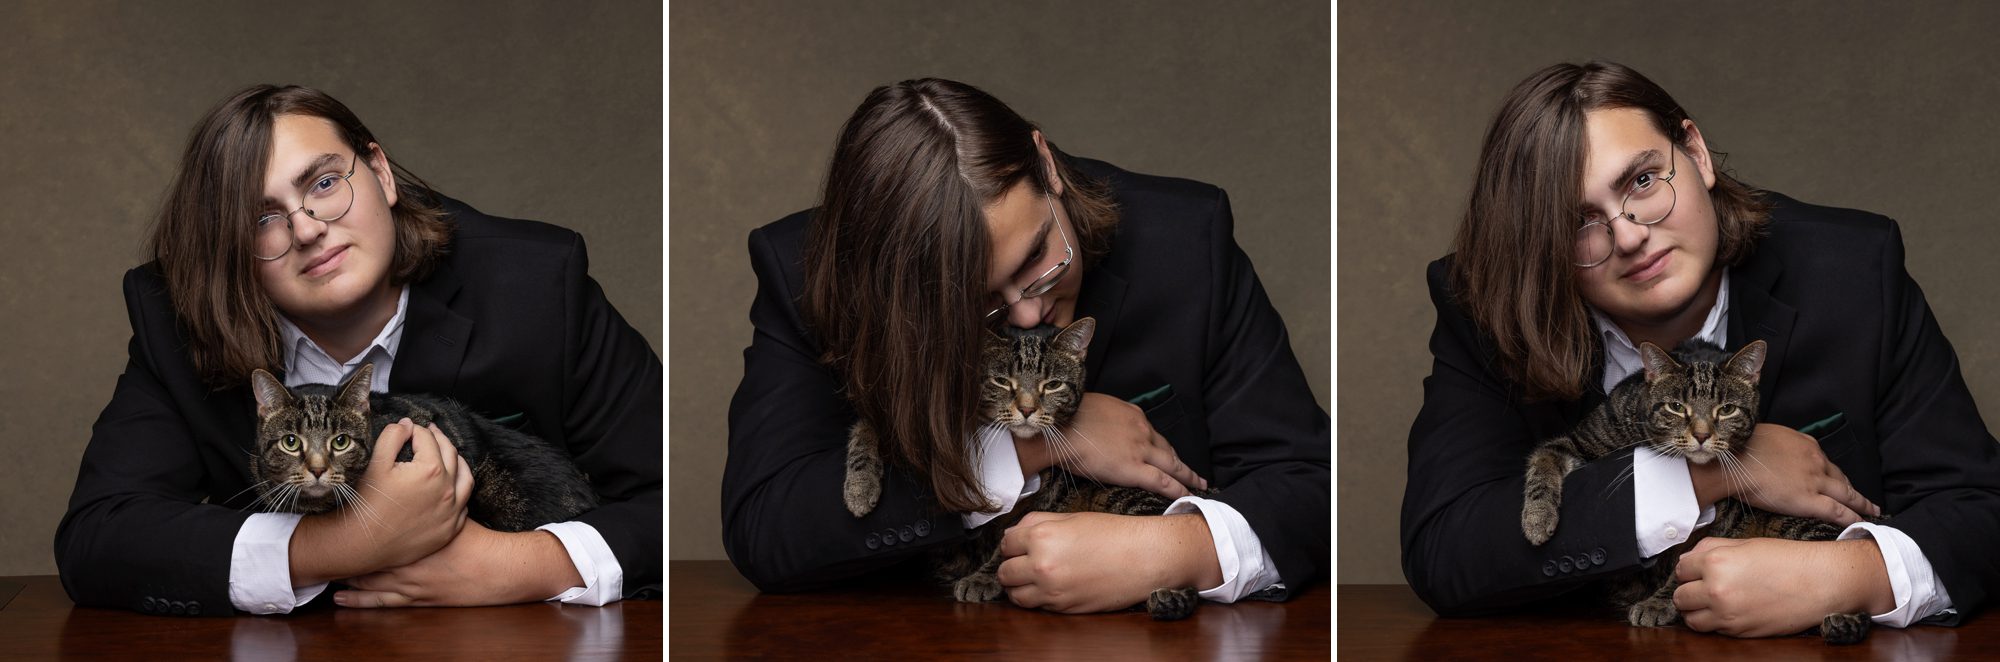 High school senior guy in studio with cat